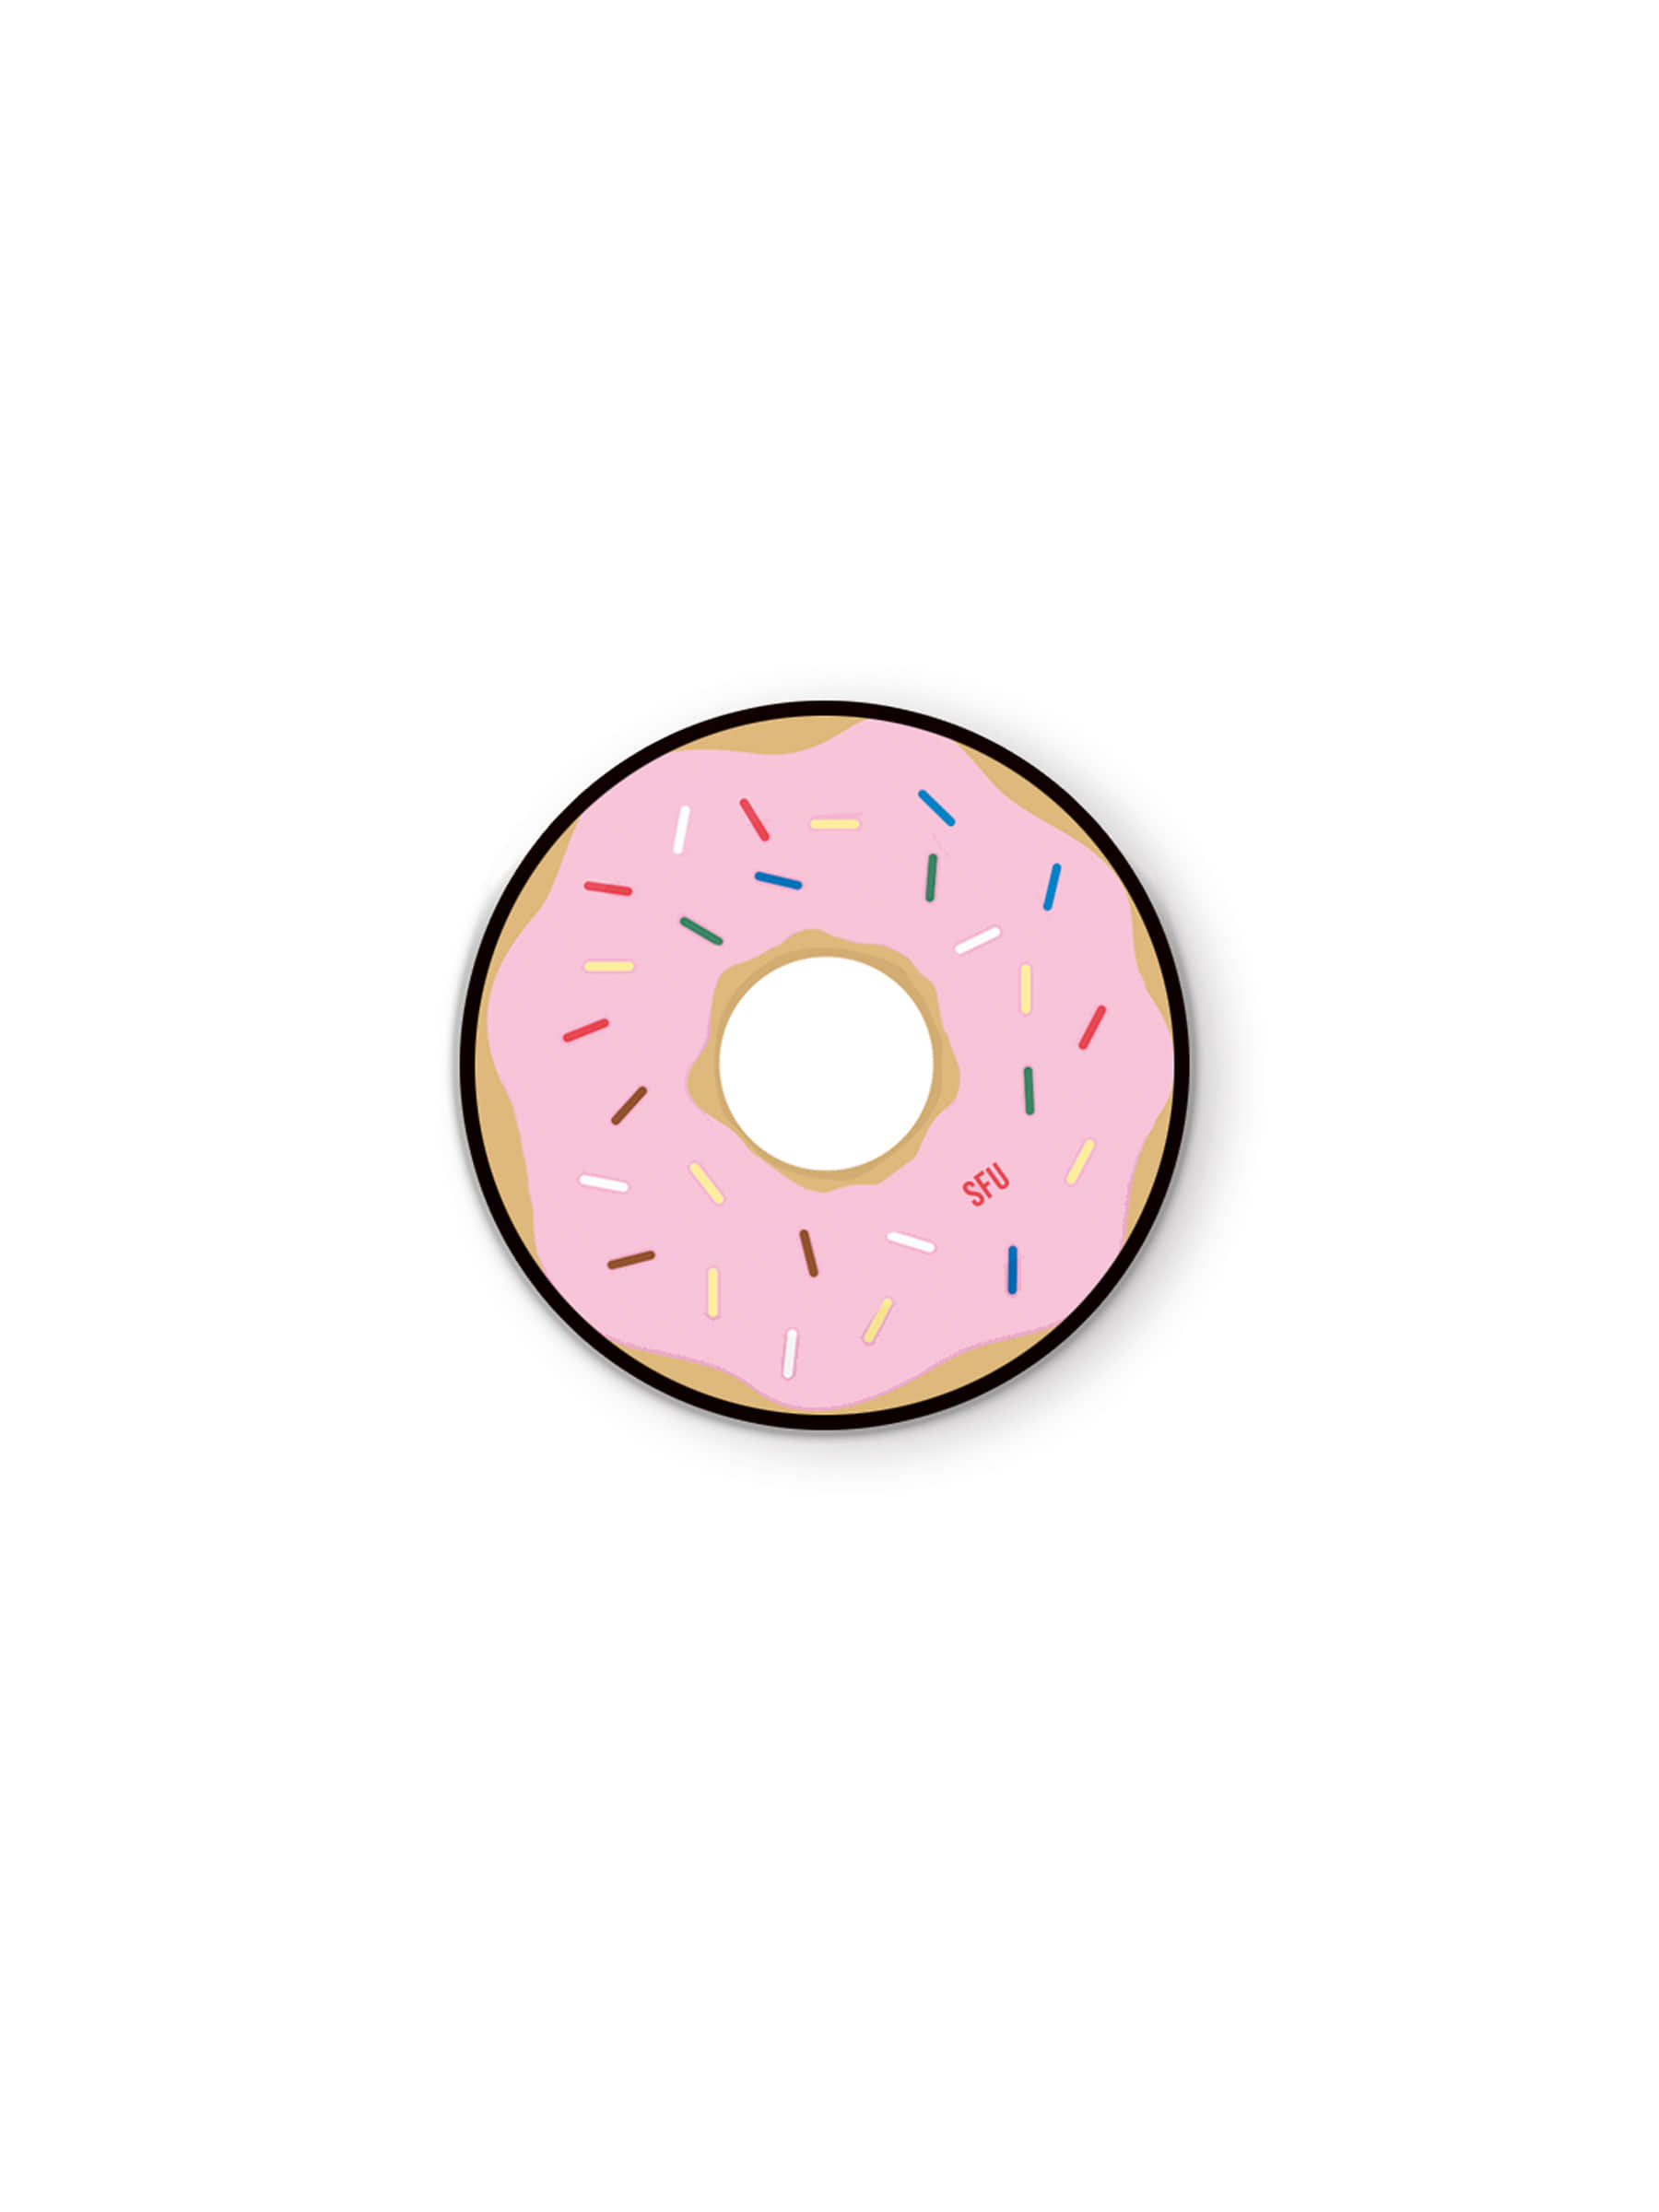 Grab [ Donut ]